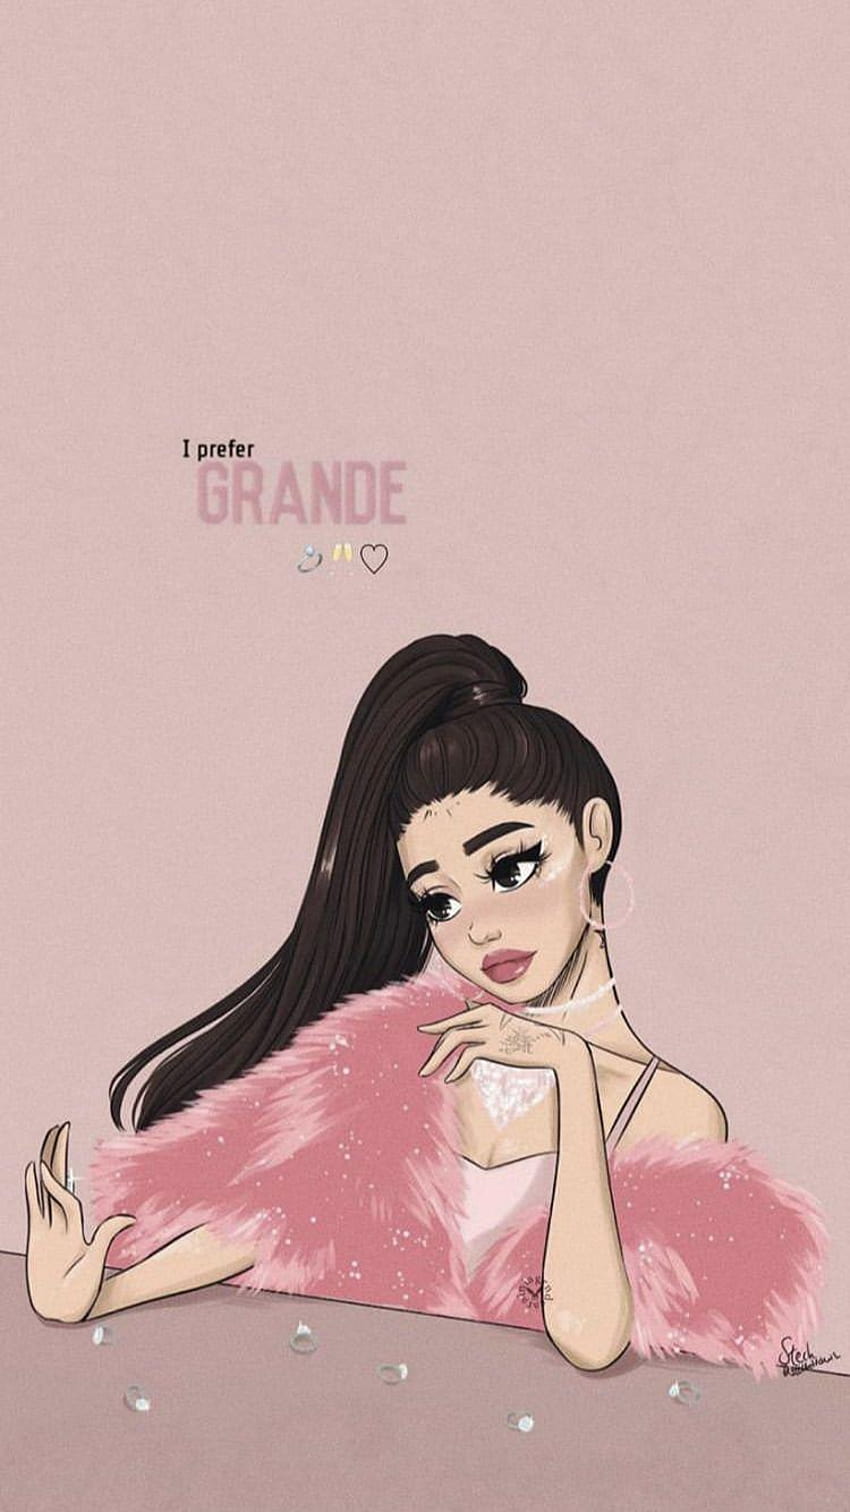 Ariana grande wallpaper, pink background, phone wallpaper, illustration - Ariana Grande